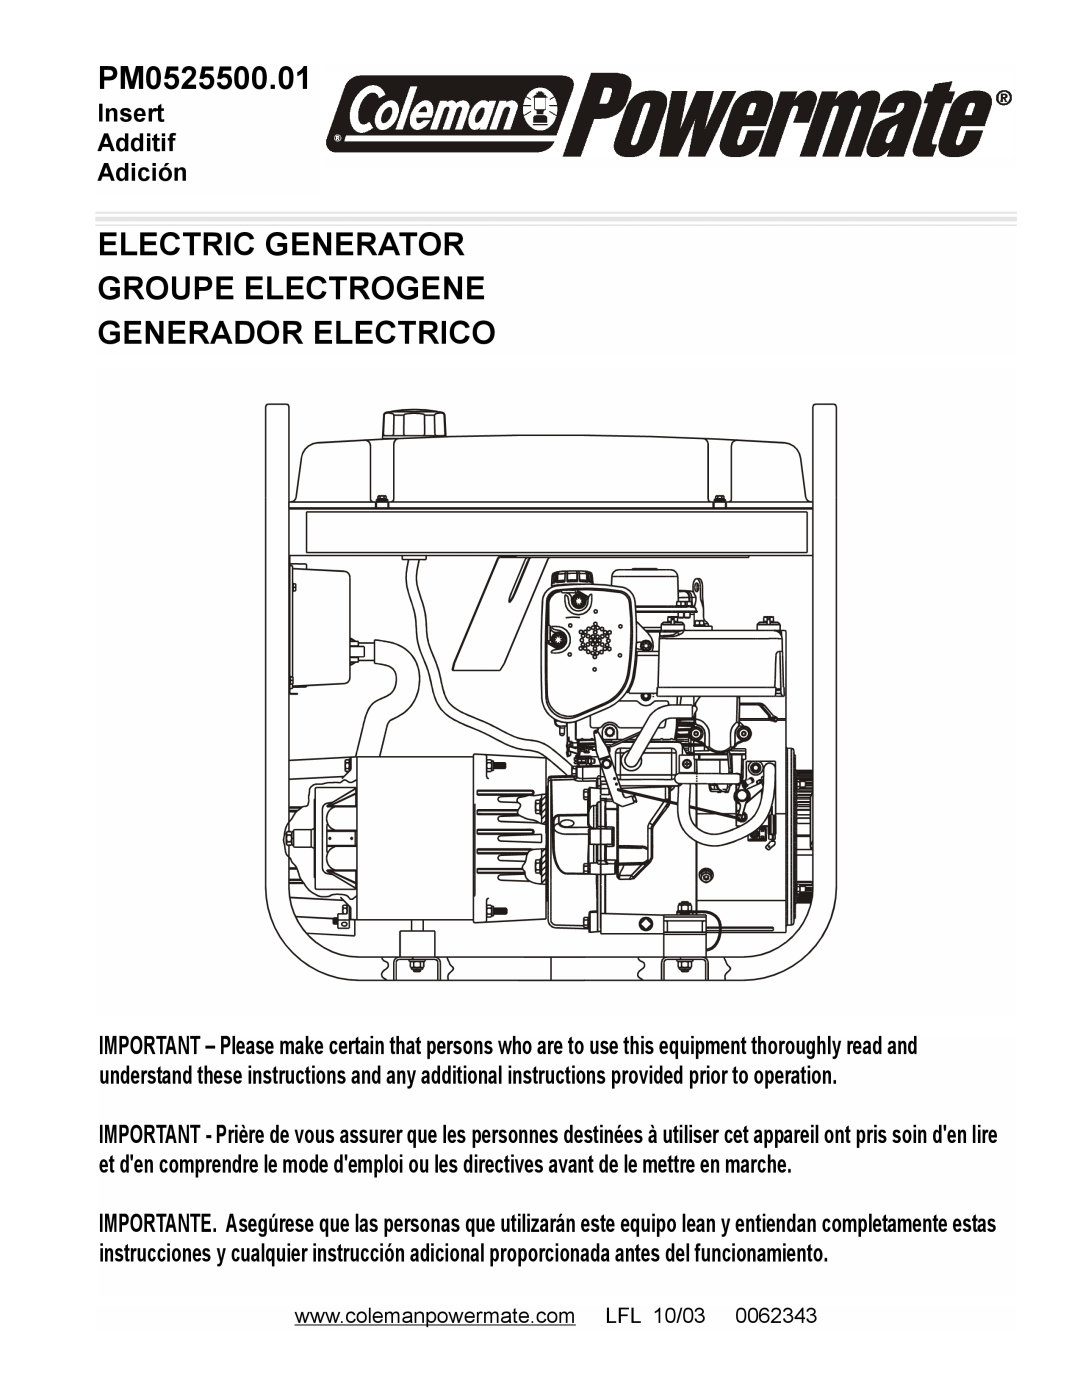 Powermate PM0525500.01 manual Electric Generator Groupe Electrogene, Generador Electrico, Insert Additif Adición 